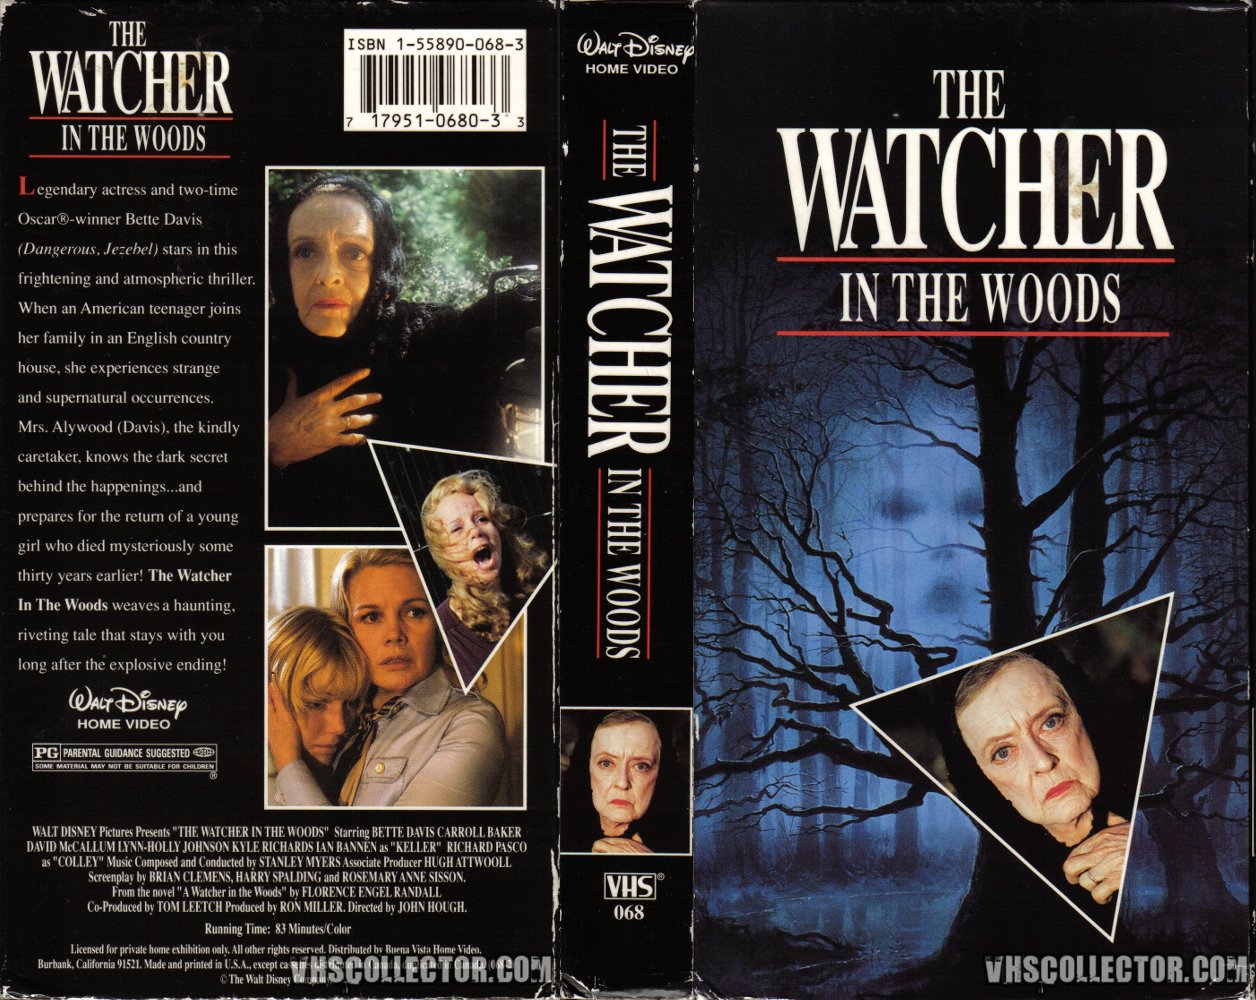 Disney's Dark Phase: Eerie Horror Movie 'The Watcher in the Woods' Turns 40  - Bloody Disgusting